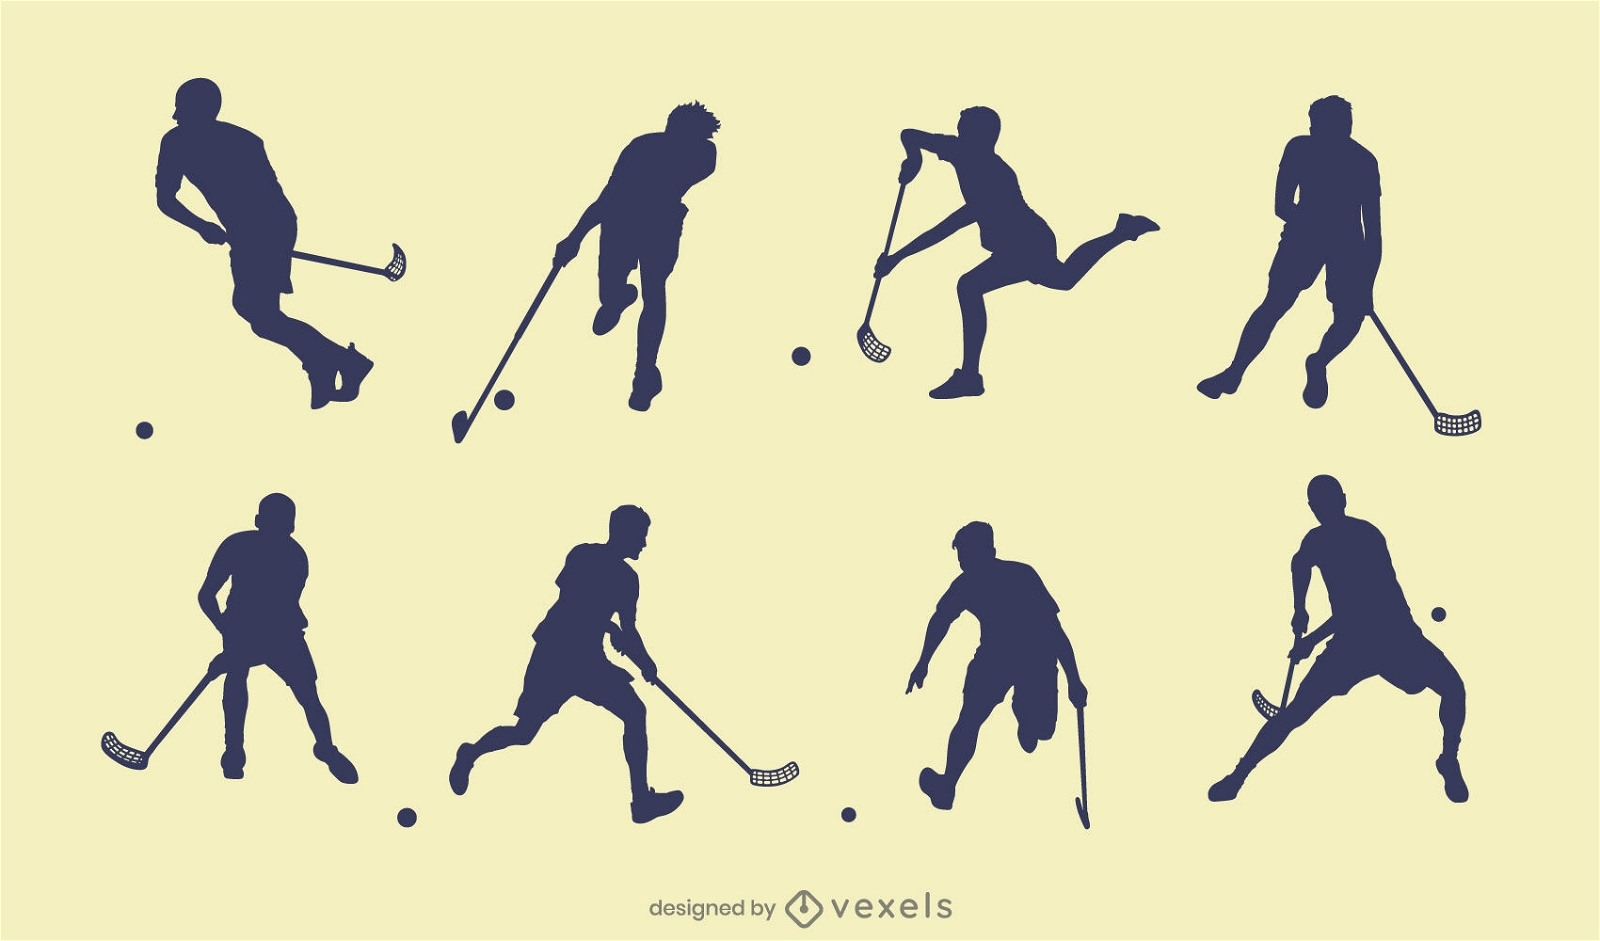 Hockeyspieler-Silhouette-Set